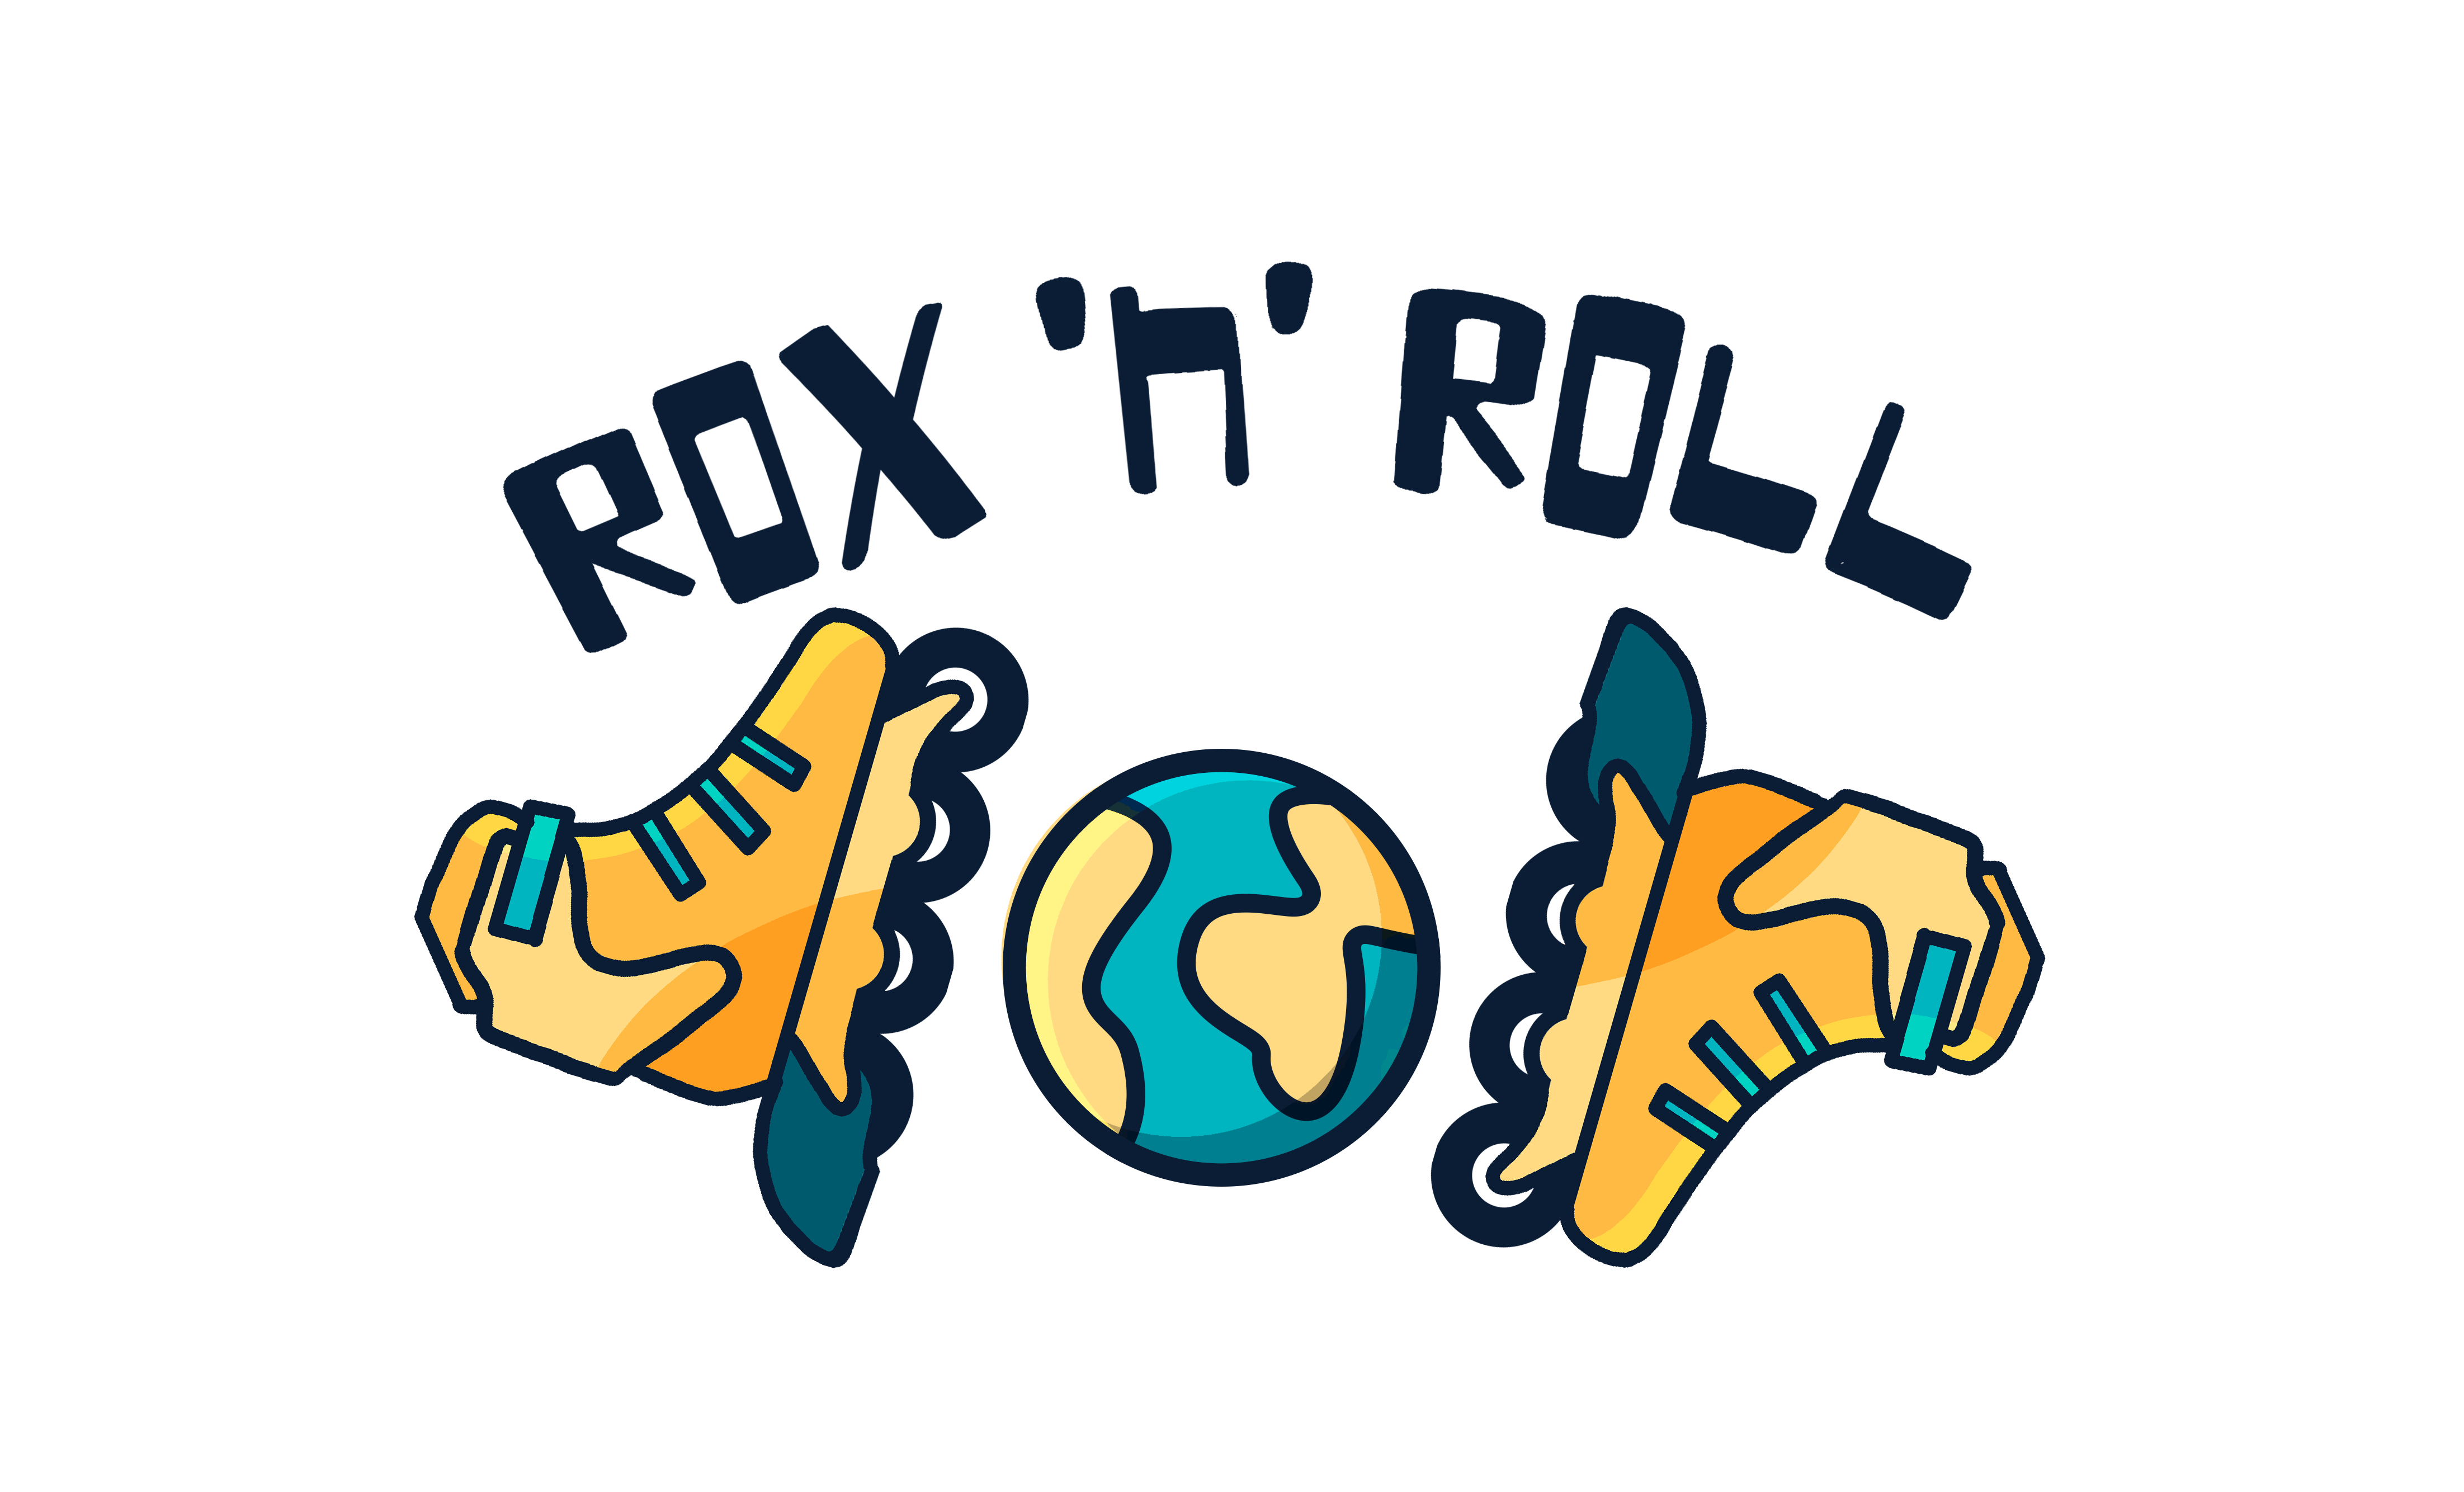 Rox 'N' Roll